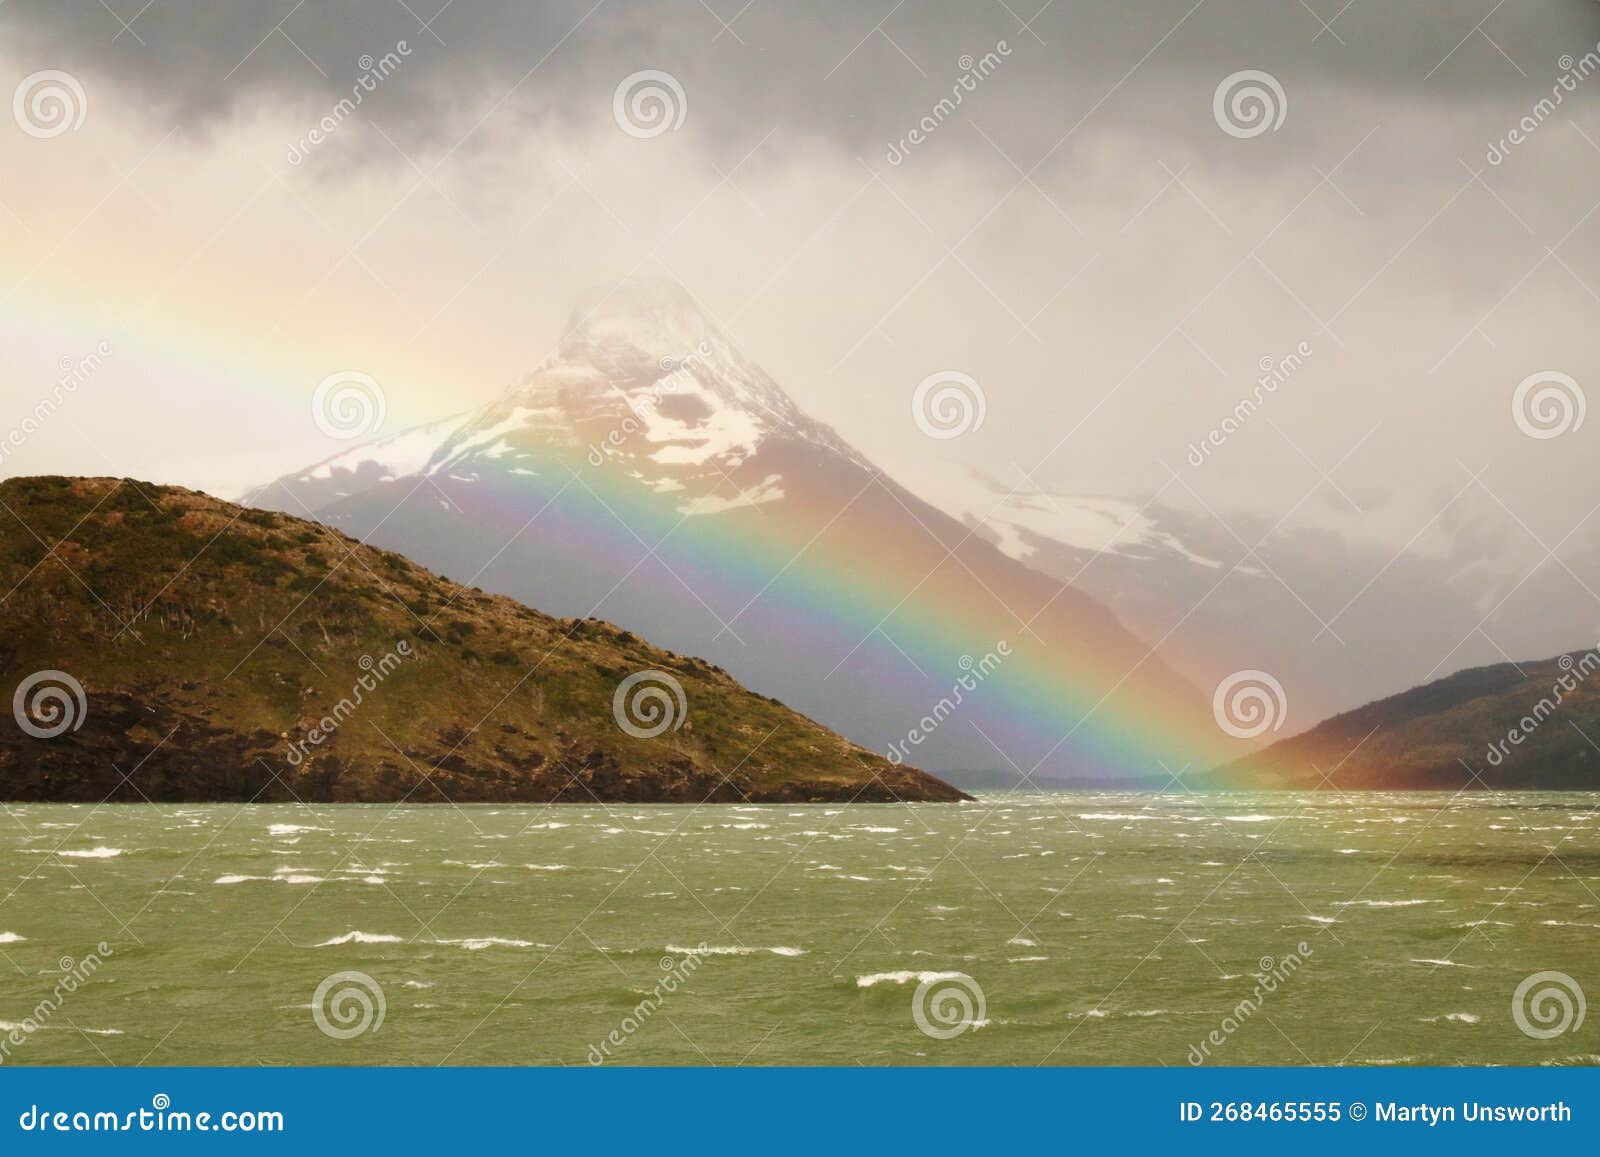 rugged mountains and a rainbow on seno de ultima esperanza, patagonia, chile